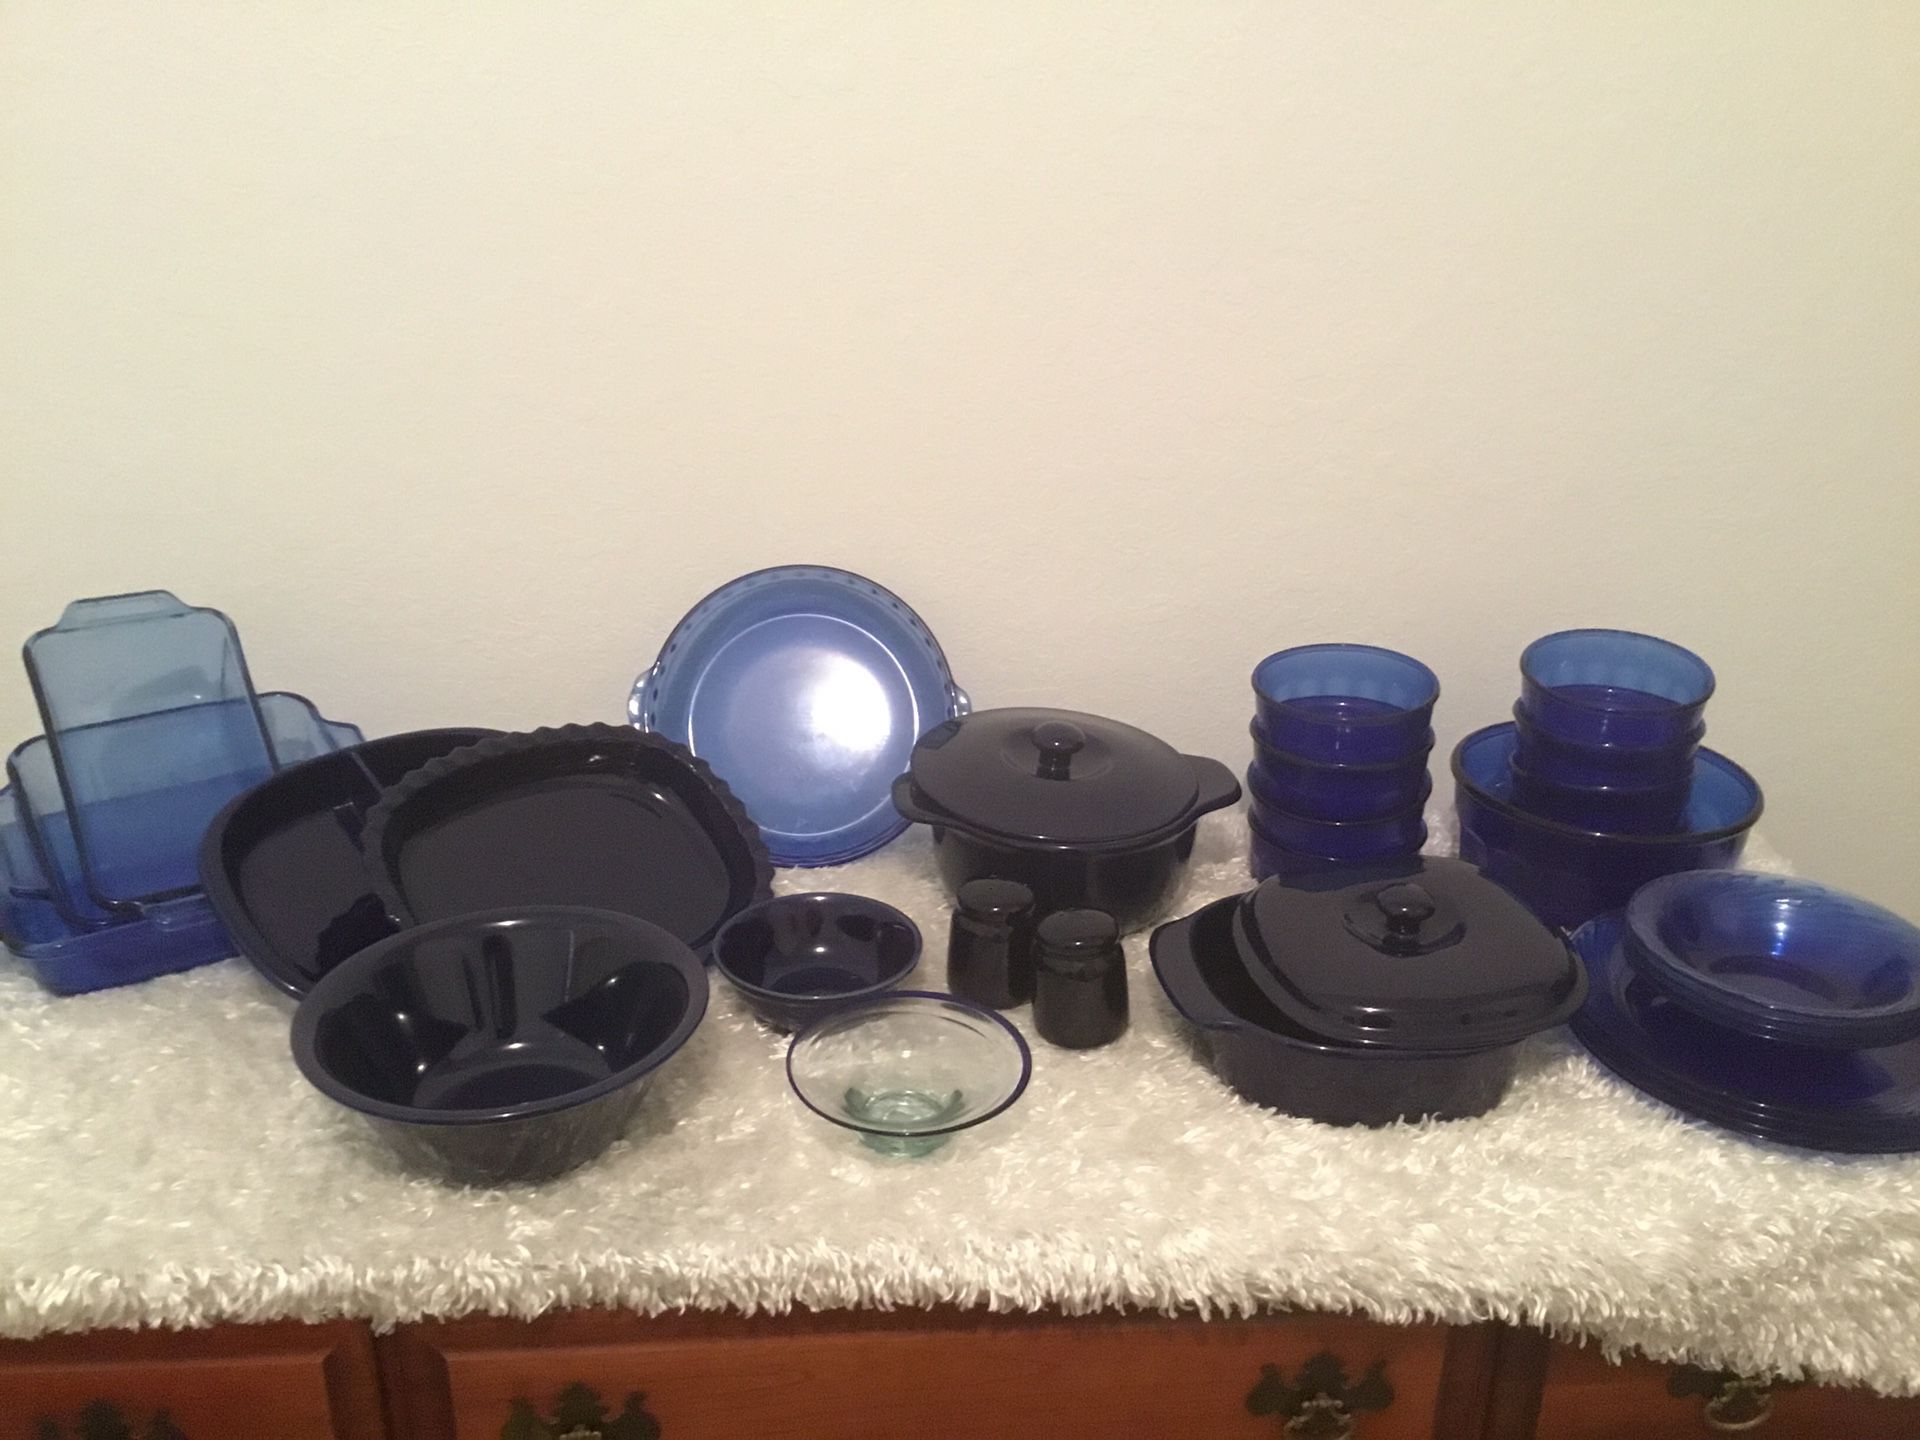 Cobalt blue kitchen starter set